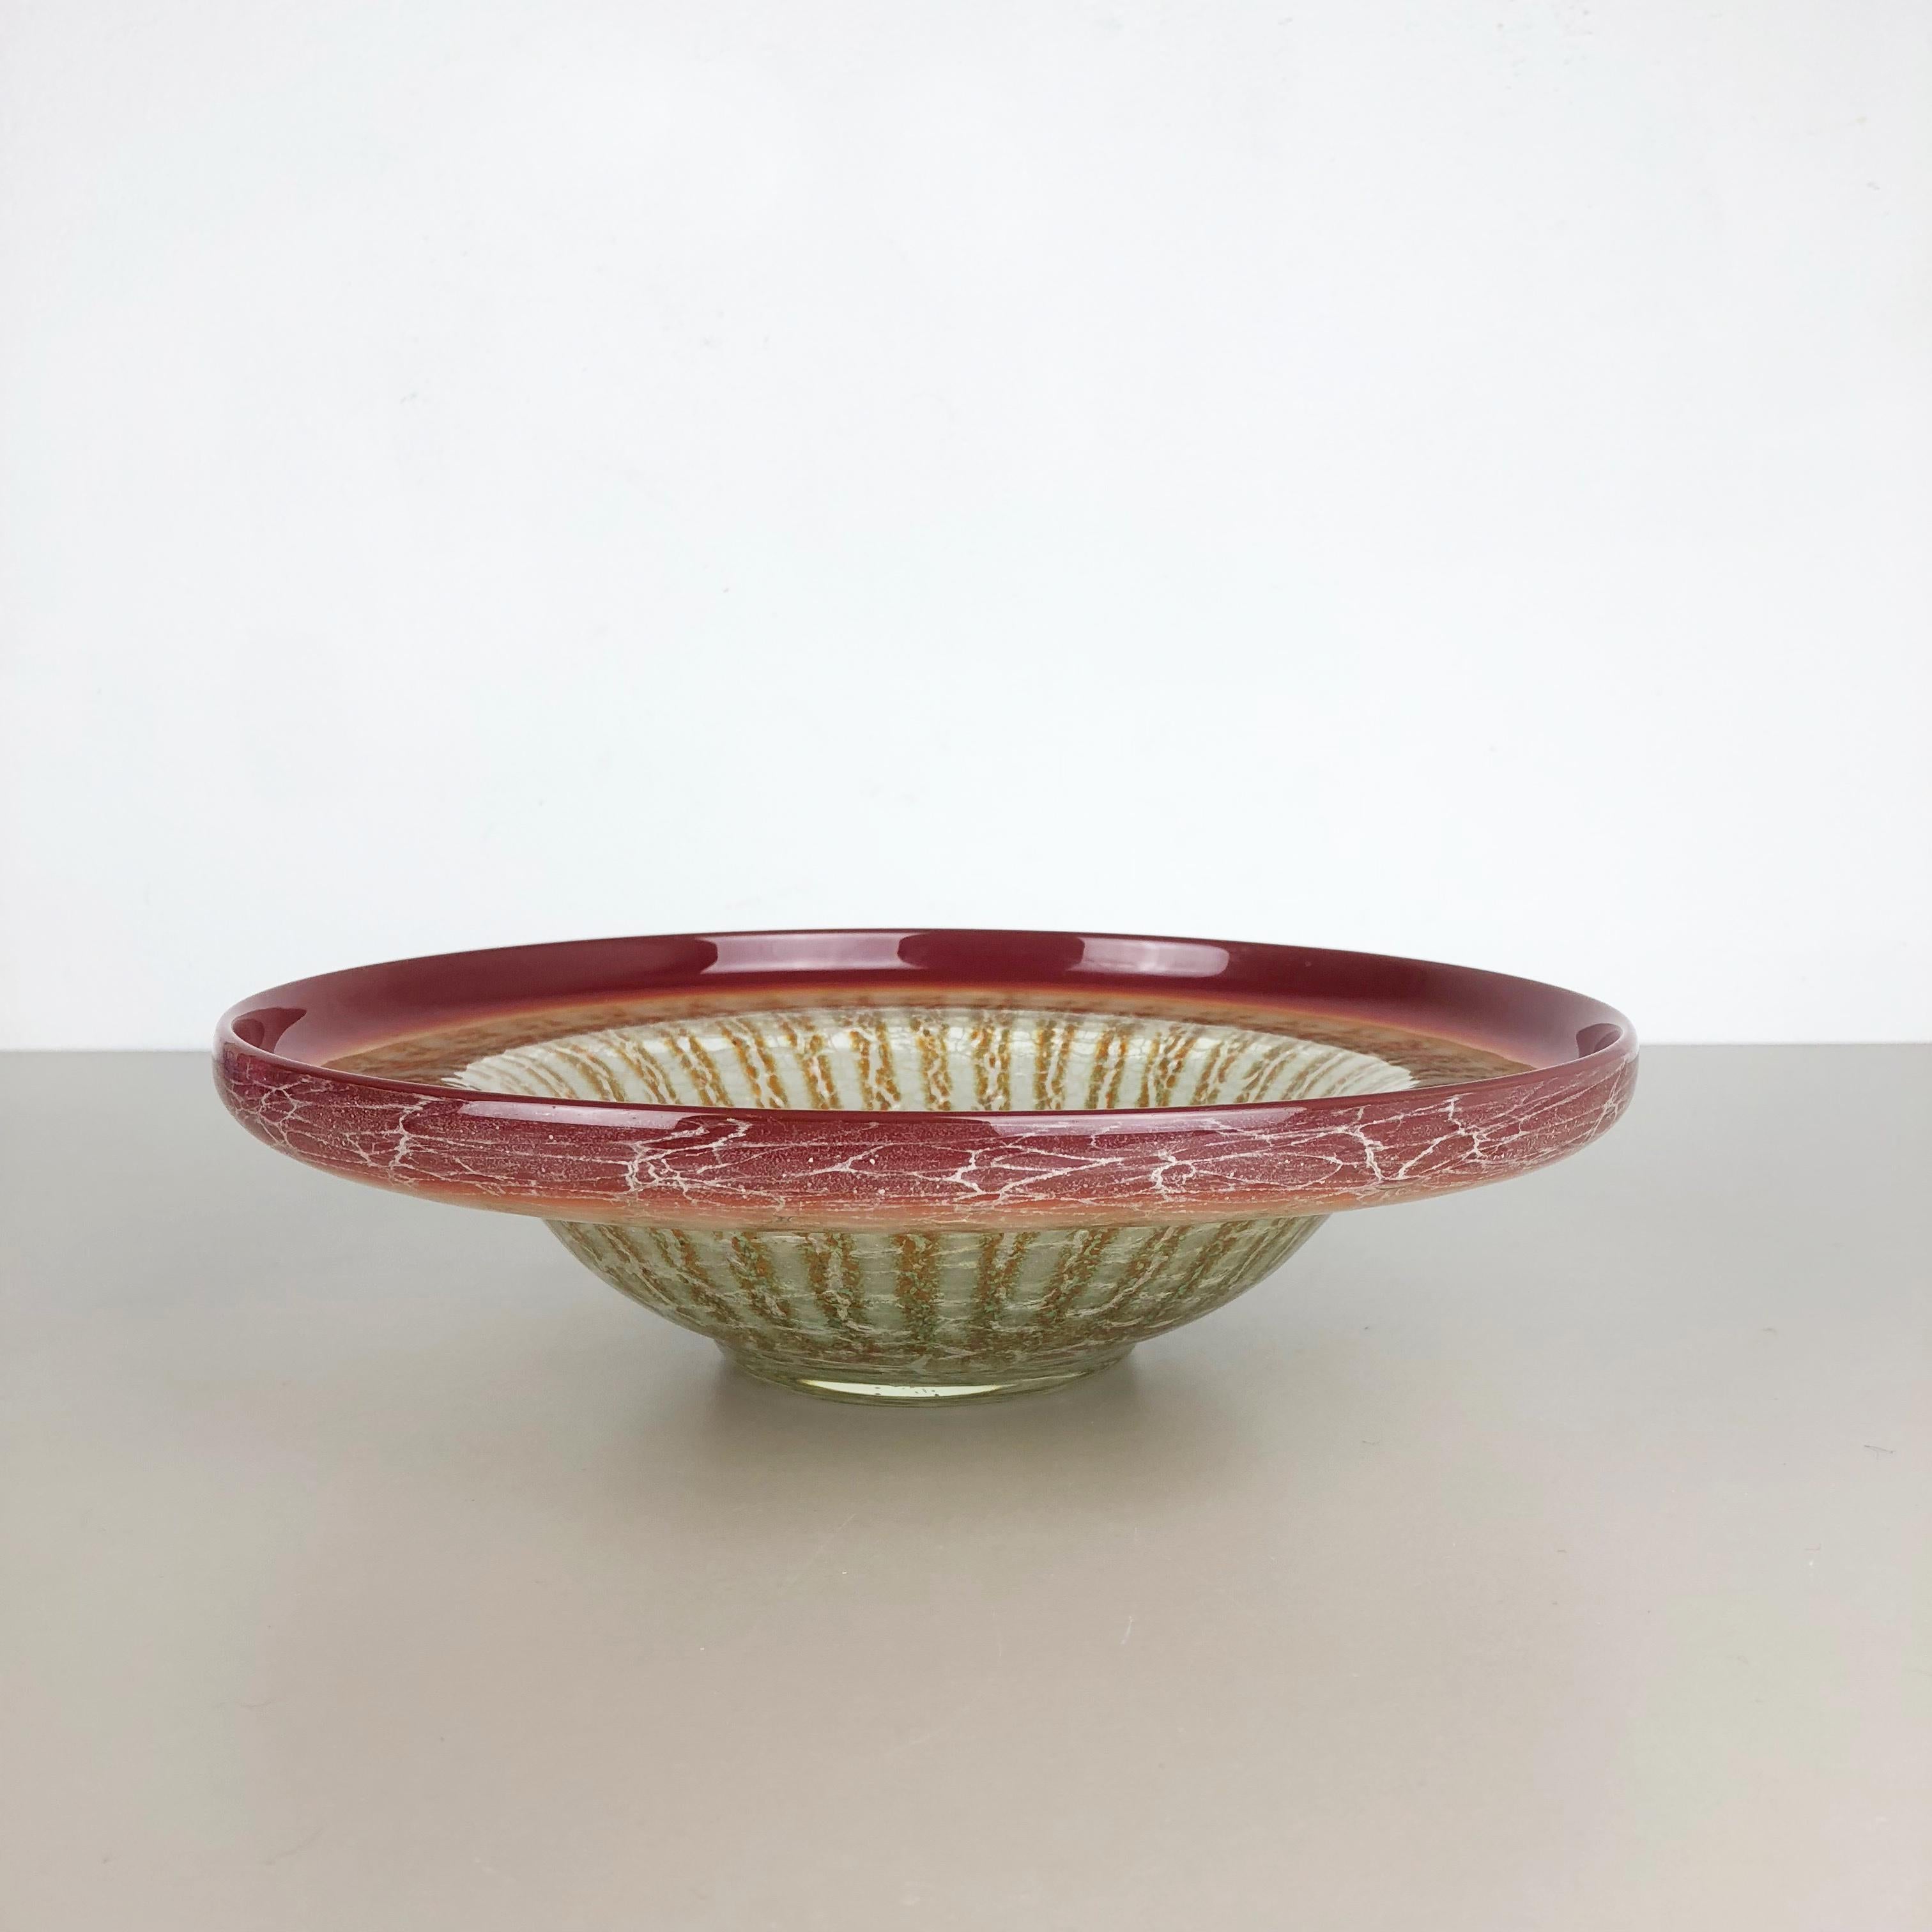 20th Century German Glass Bowl by Karl Wiedmann for WMF Ikora, 1930s Bauhaus Art Deco